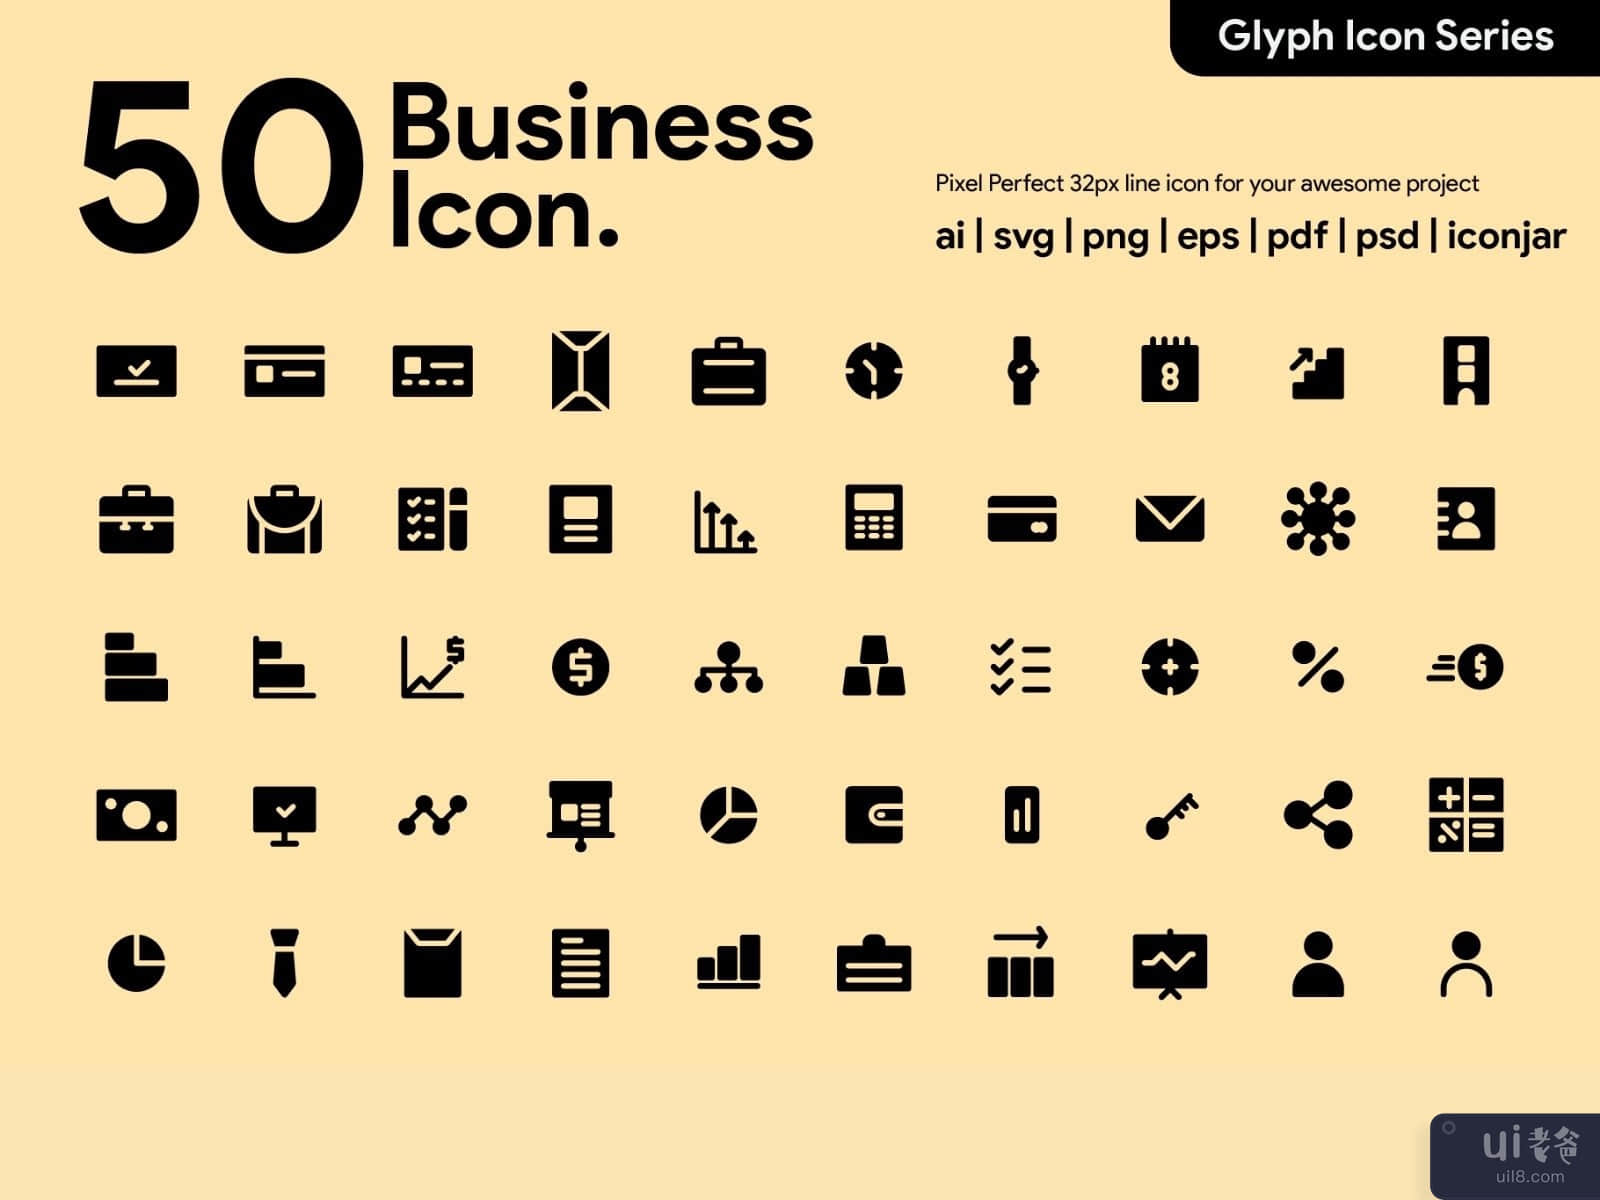 Kawaicon - 50 Business Glyph Icon Set